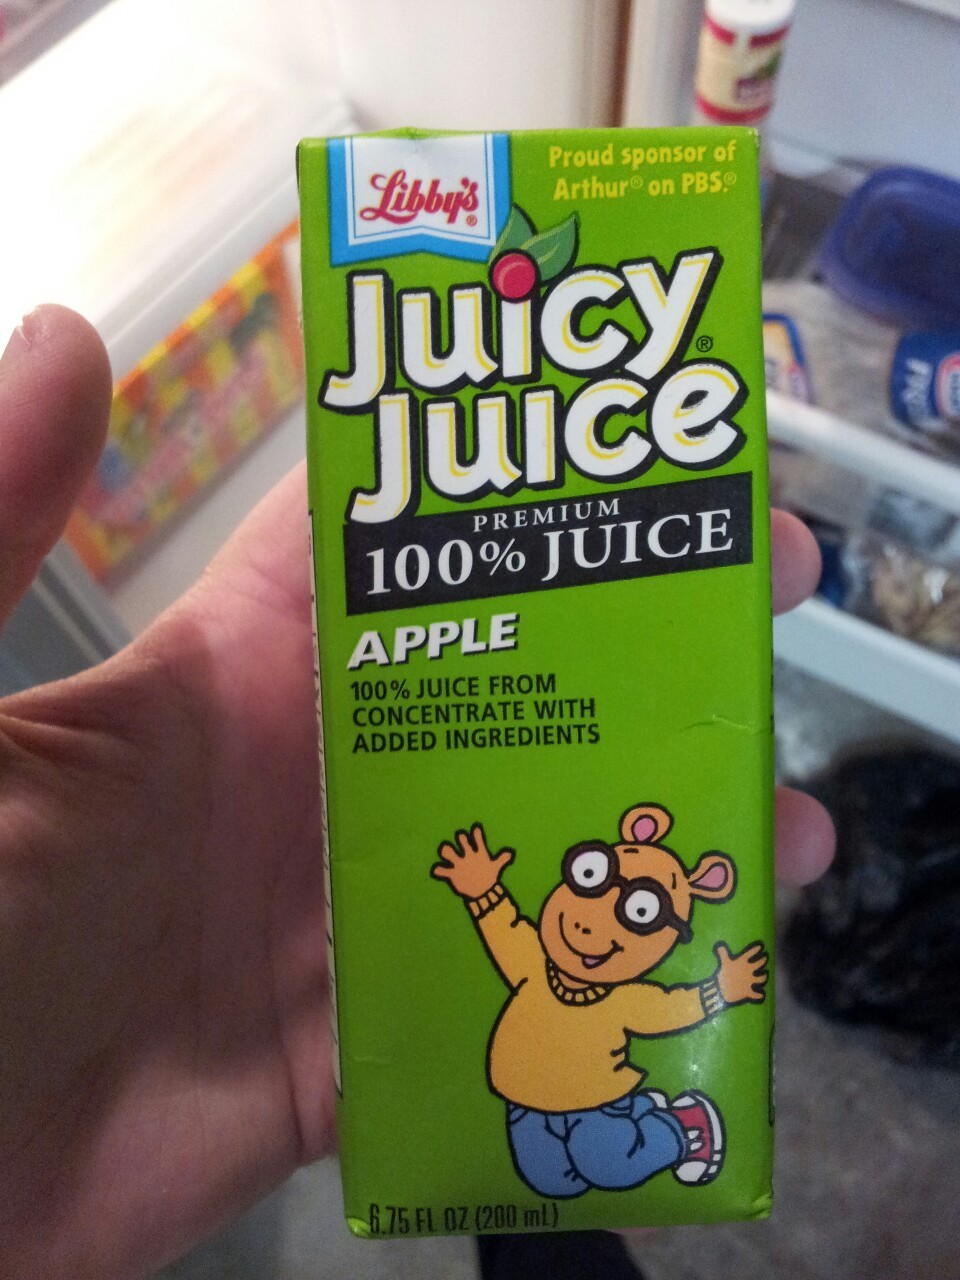 Youtube Juicy Juice Box